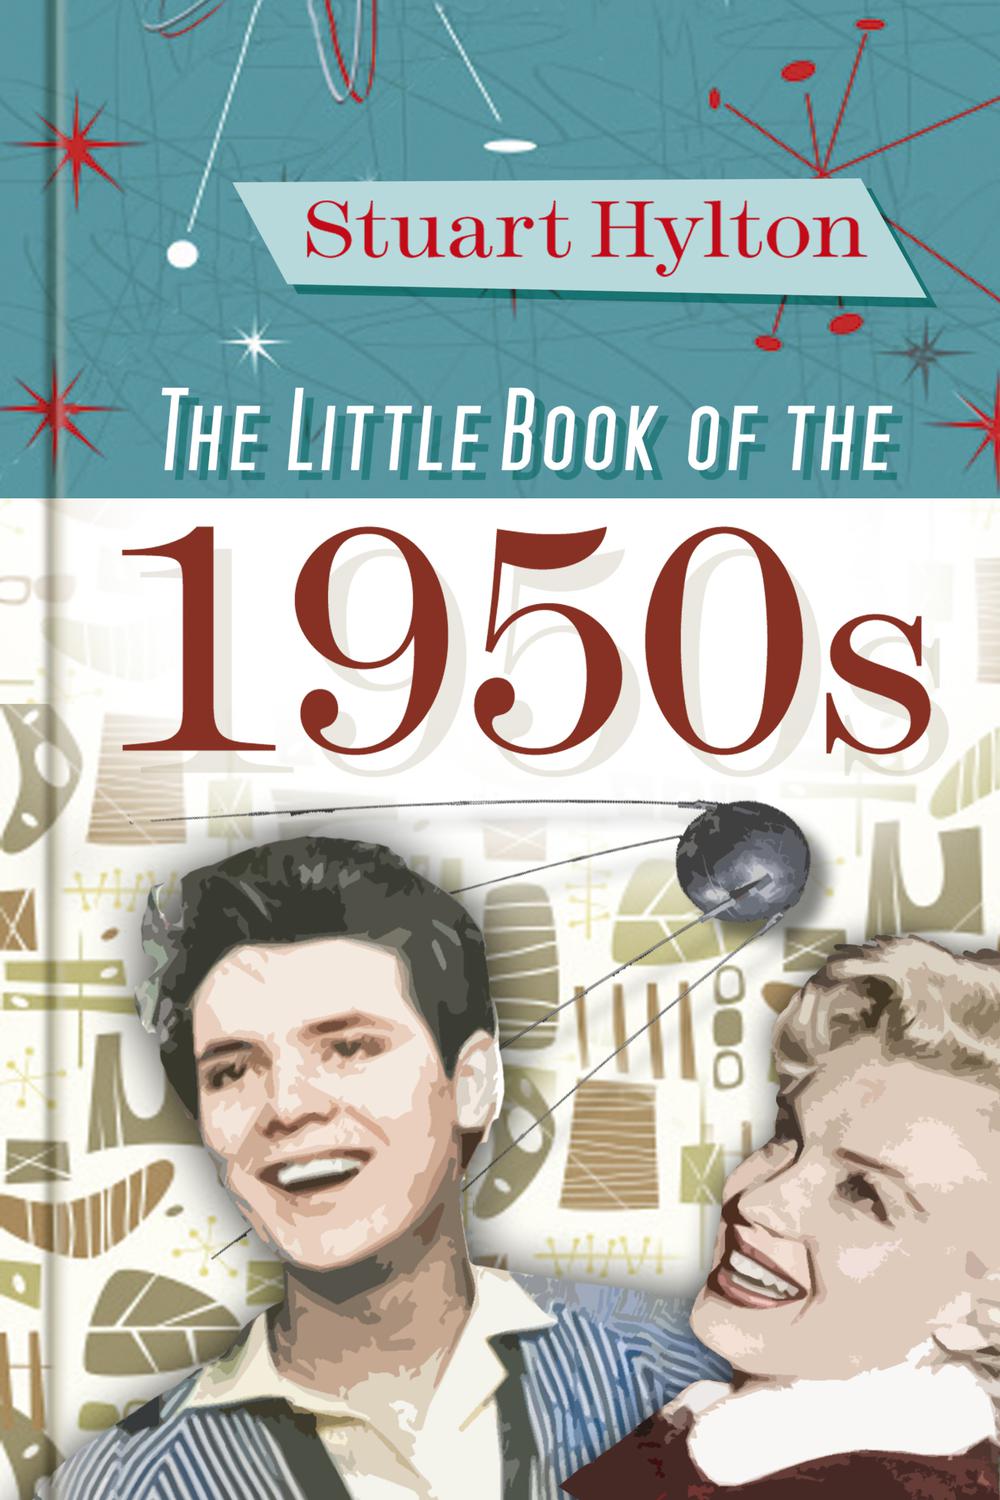 The Little Book of the 1950s - Stuart Hylton